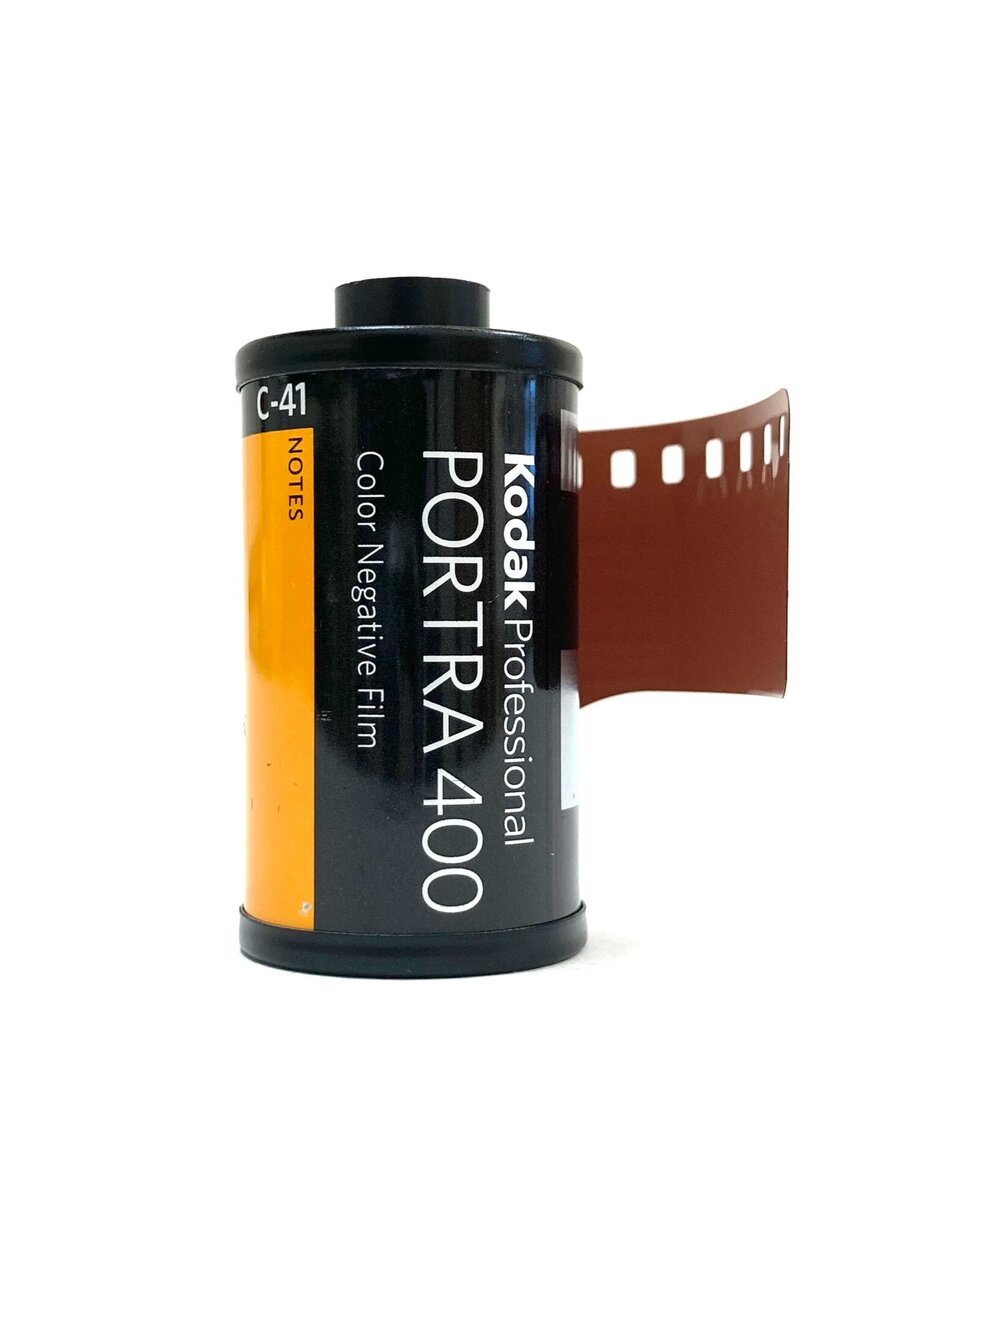 Kodak Portra 400 35mm Film — Photographique